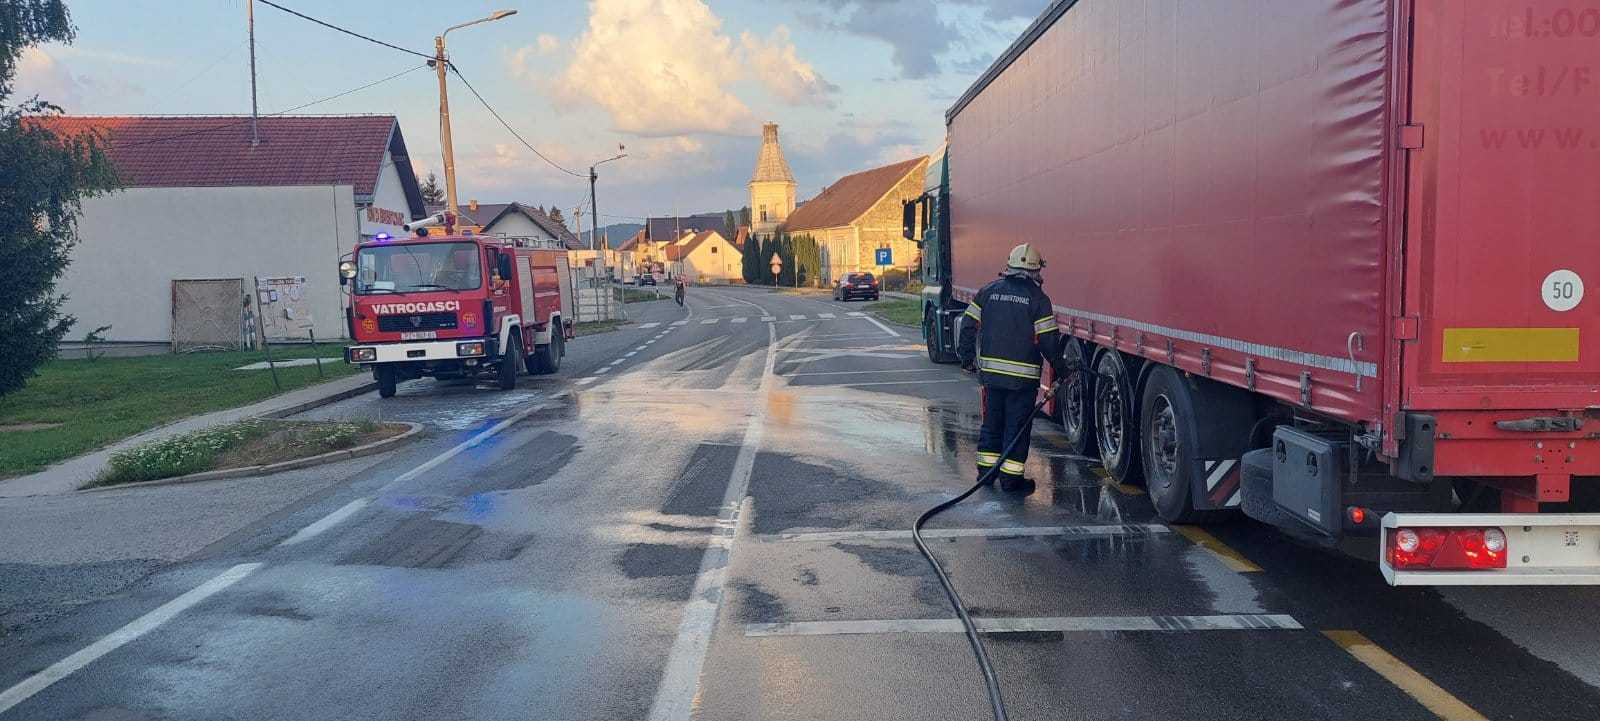 Sinoć požar na kamionu u Brestovcu